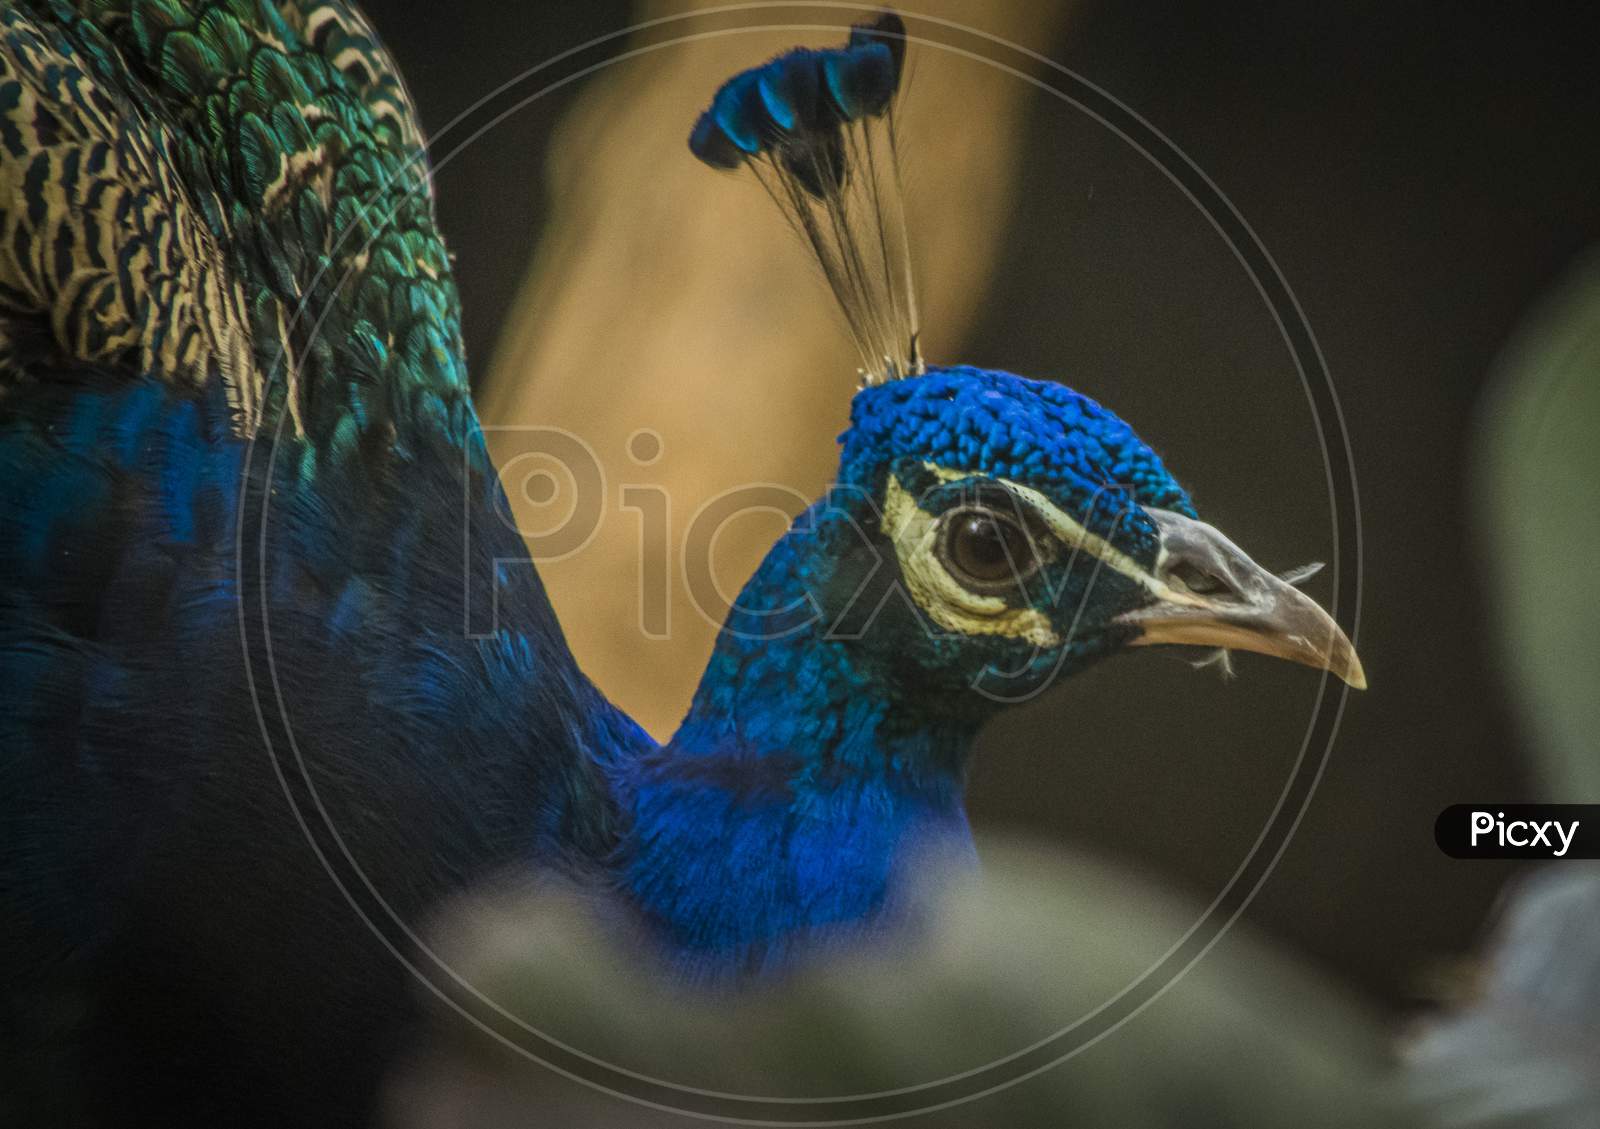 Peacock Head Closeup